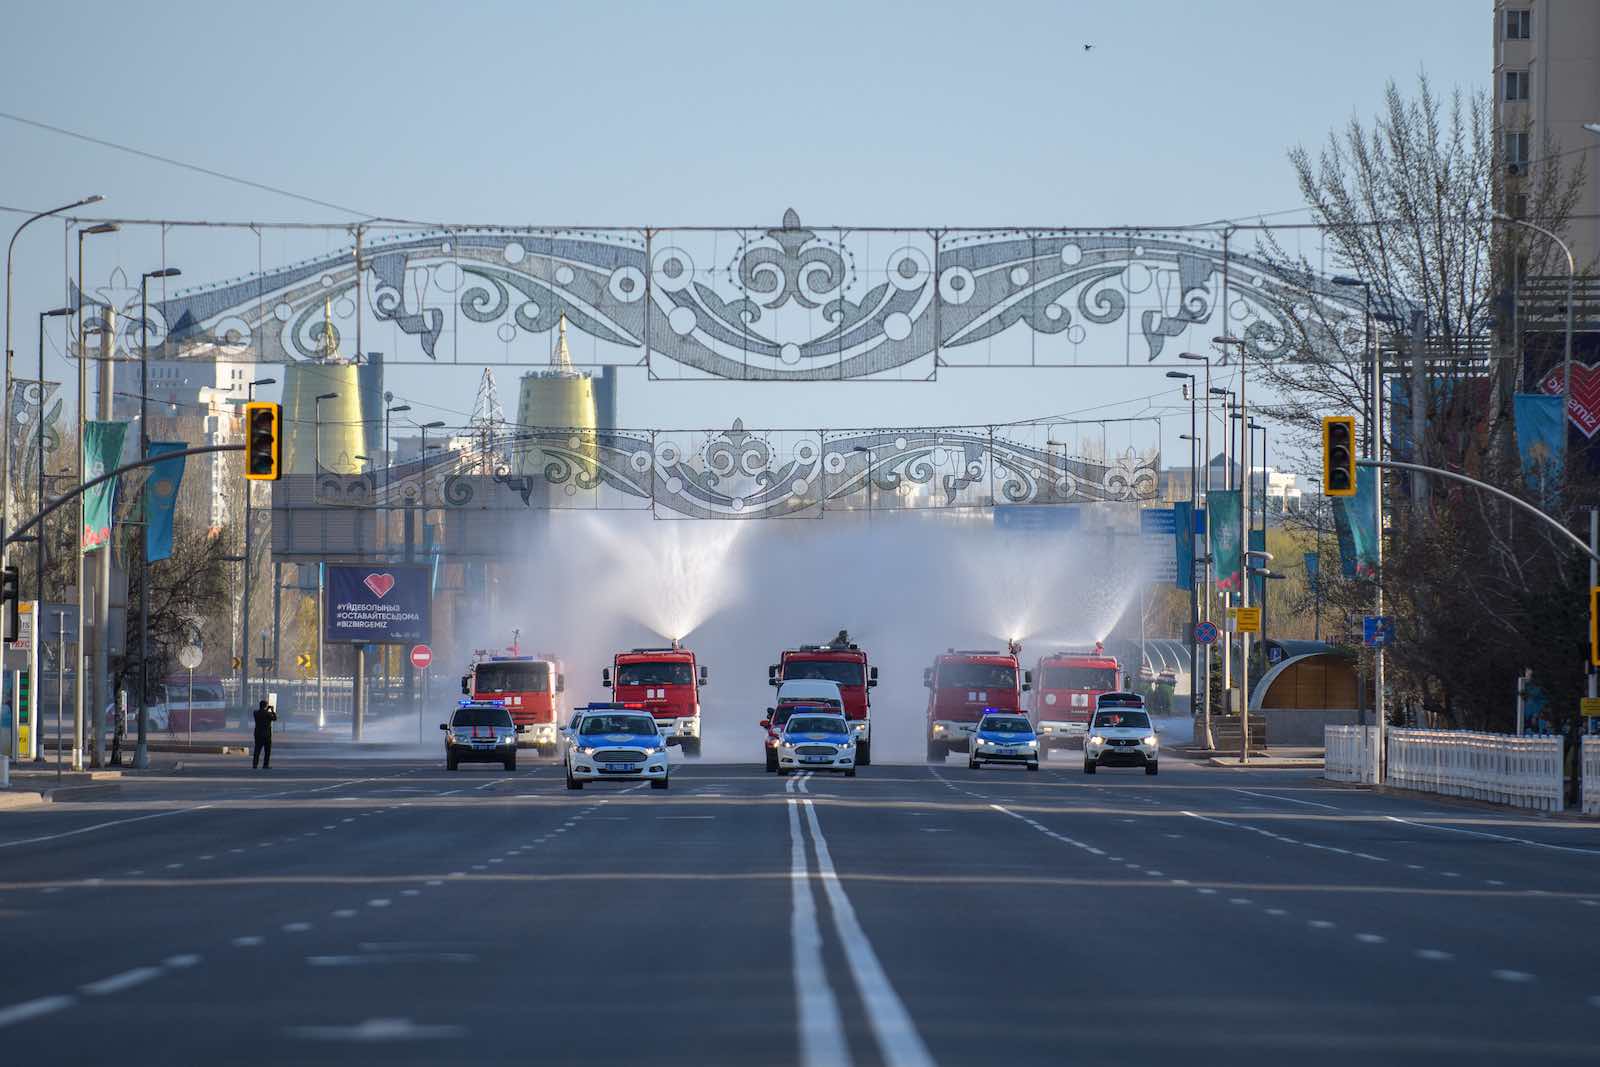 The fire service sprays disinfectant in Nur-Sultan, Kazakhstan last month during the Covid-19 lockdown (Turar Kazangapov/Asian Development Bank/Flickr)